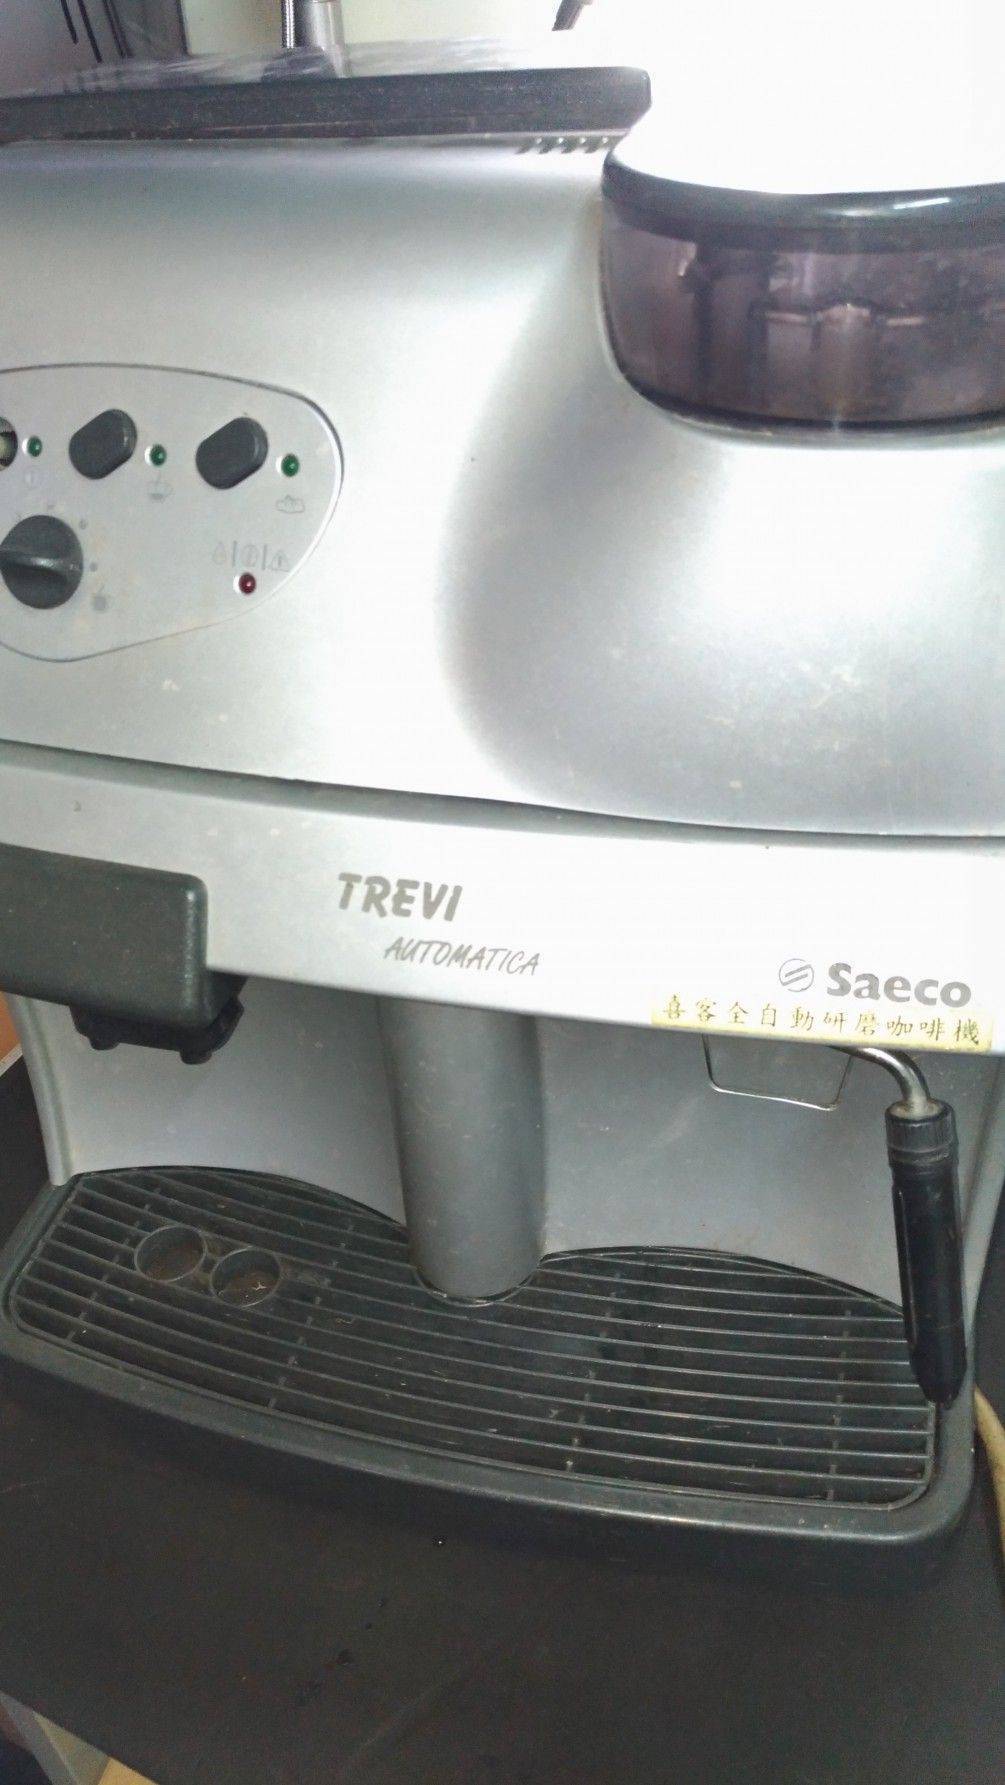 Saeco-trevl維修處理1更新零件